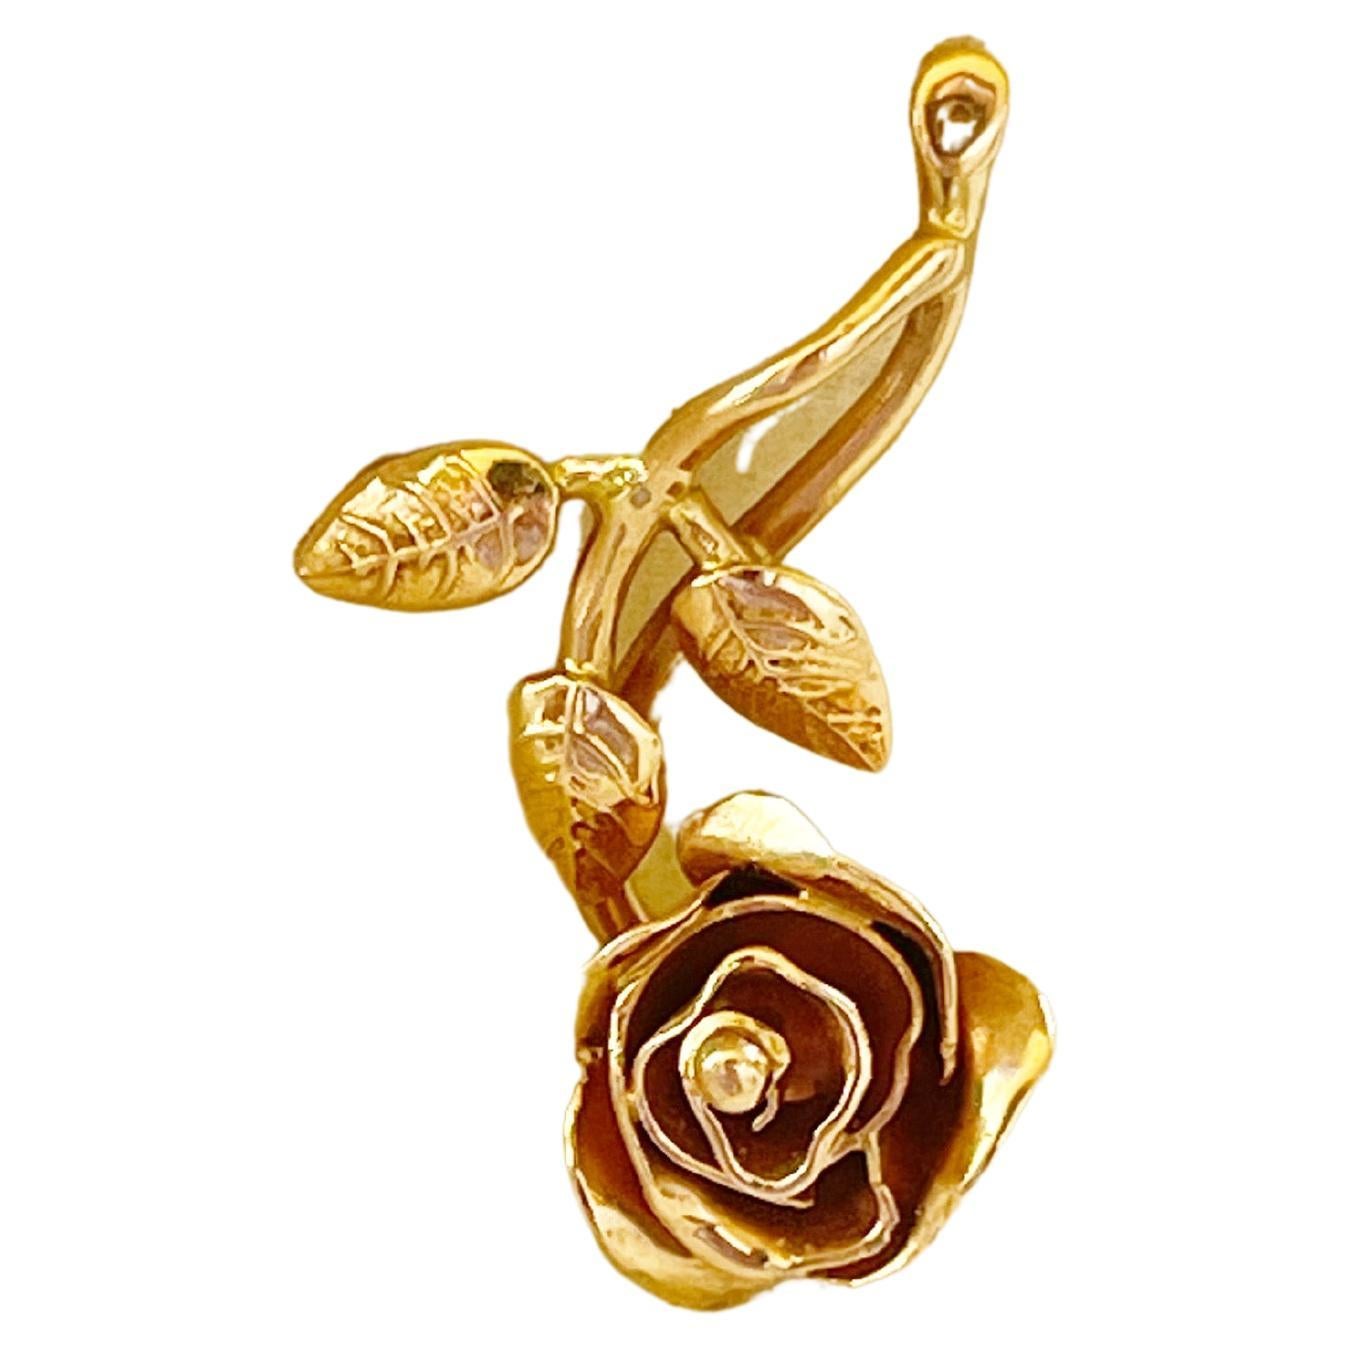 Pendentif long en or rose 14 carats avec breloque sculptée à la main en forme de rose